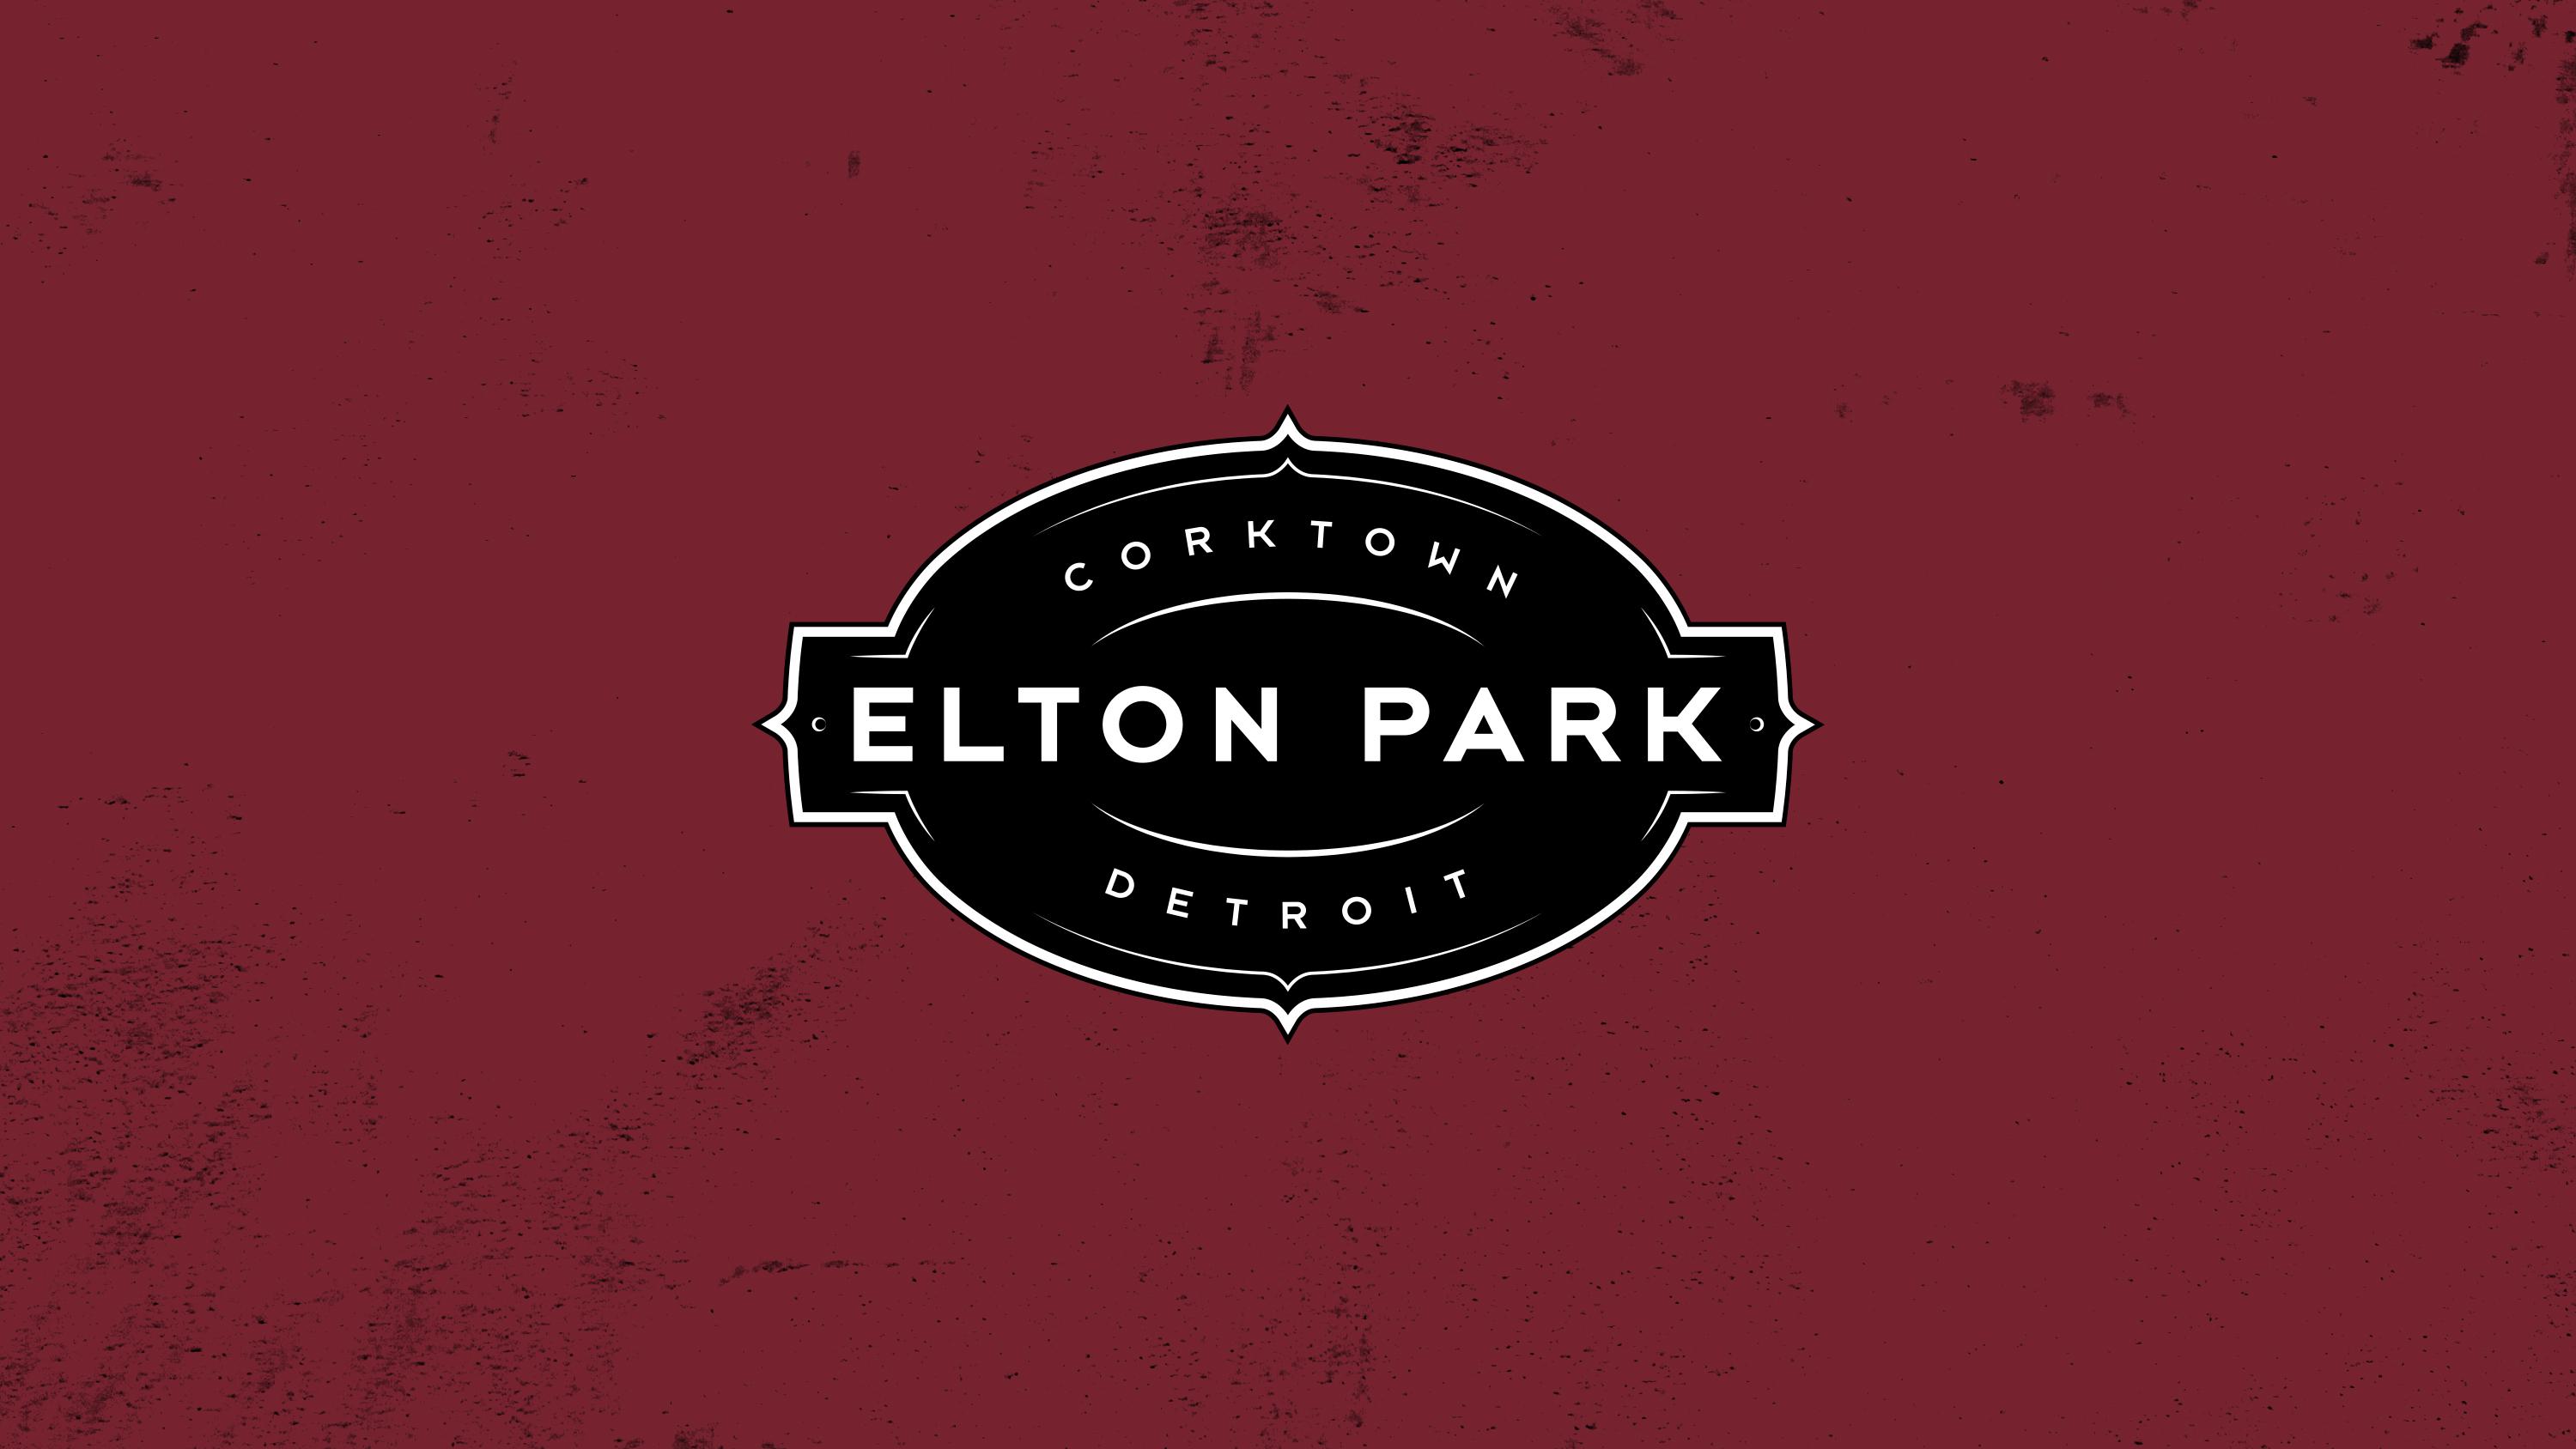 Elton Park logo against the signature red background texture